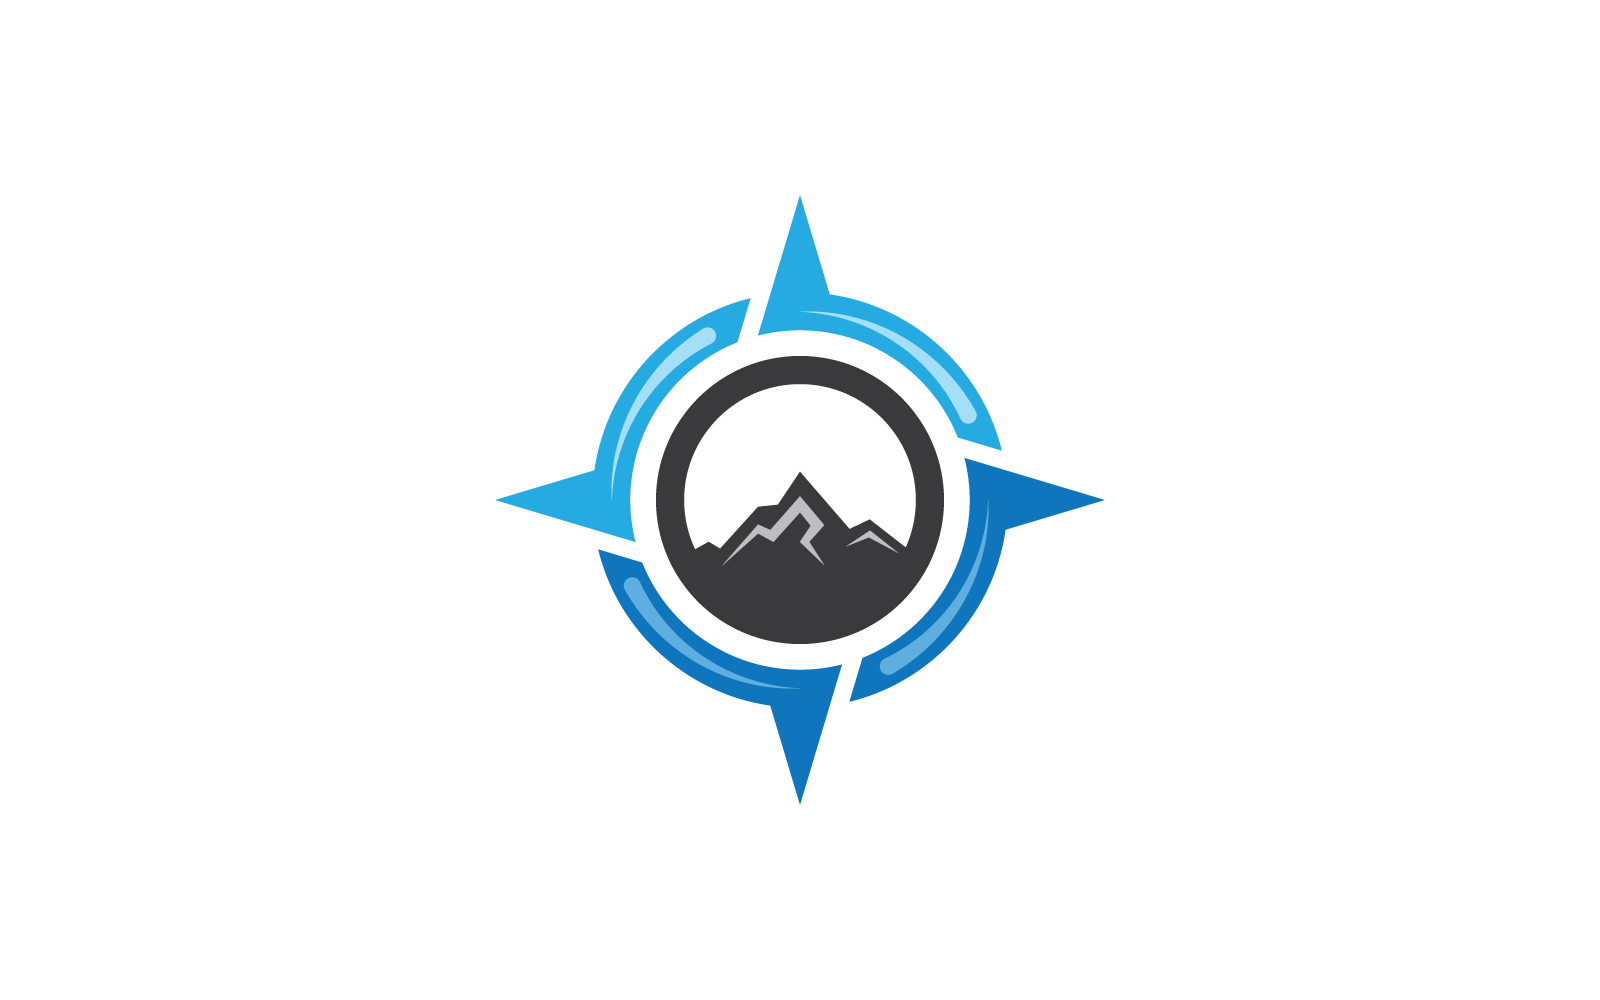 Kompass-Logo-Vorlage, Vektorsymbol, flaches Design